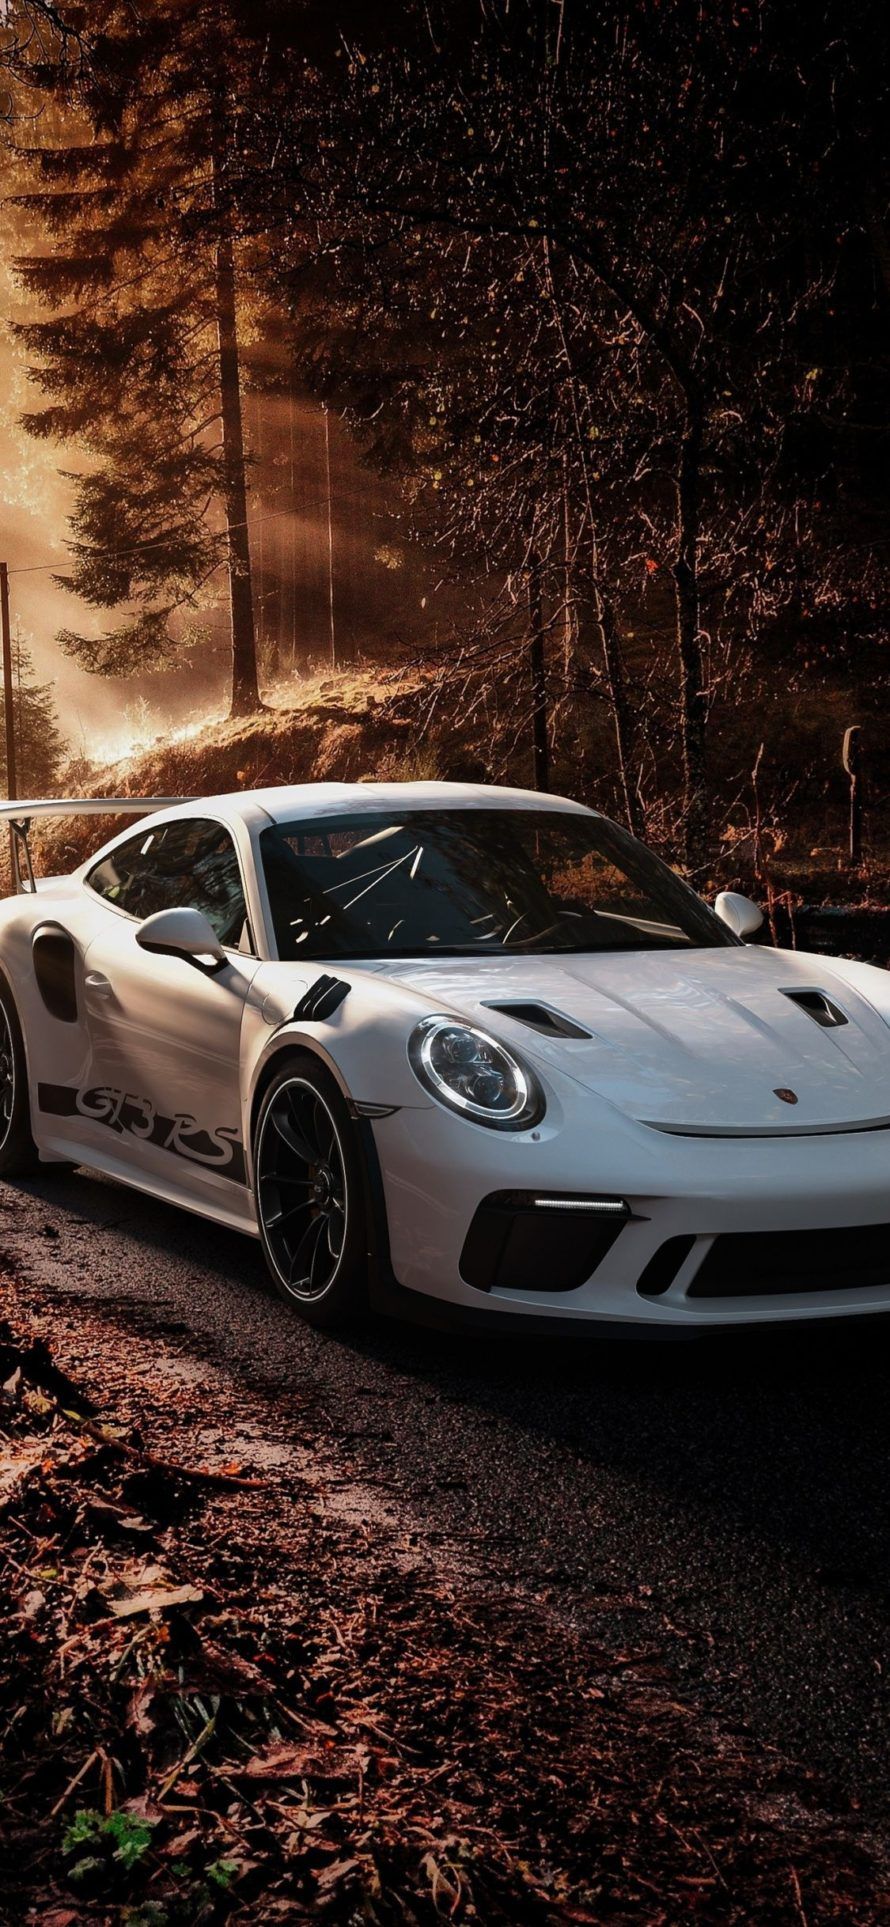 Porsche 911 Gt3 Rs Iphone Wallpapers